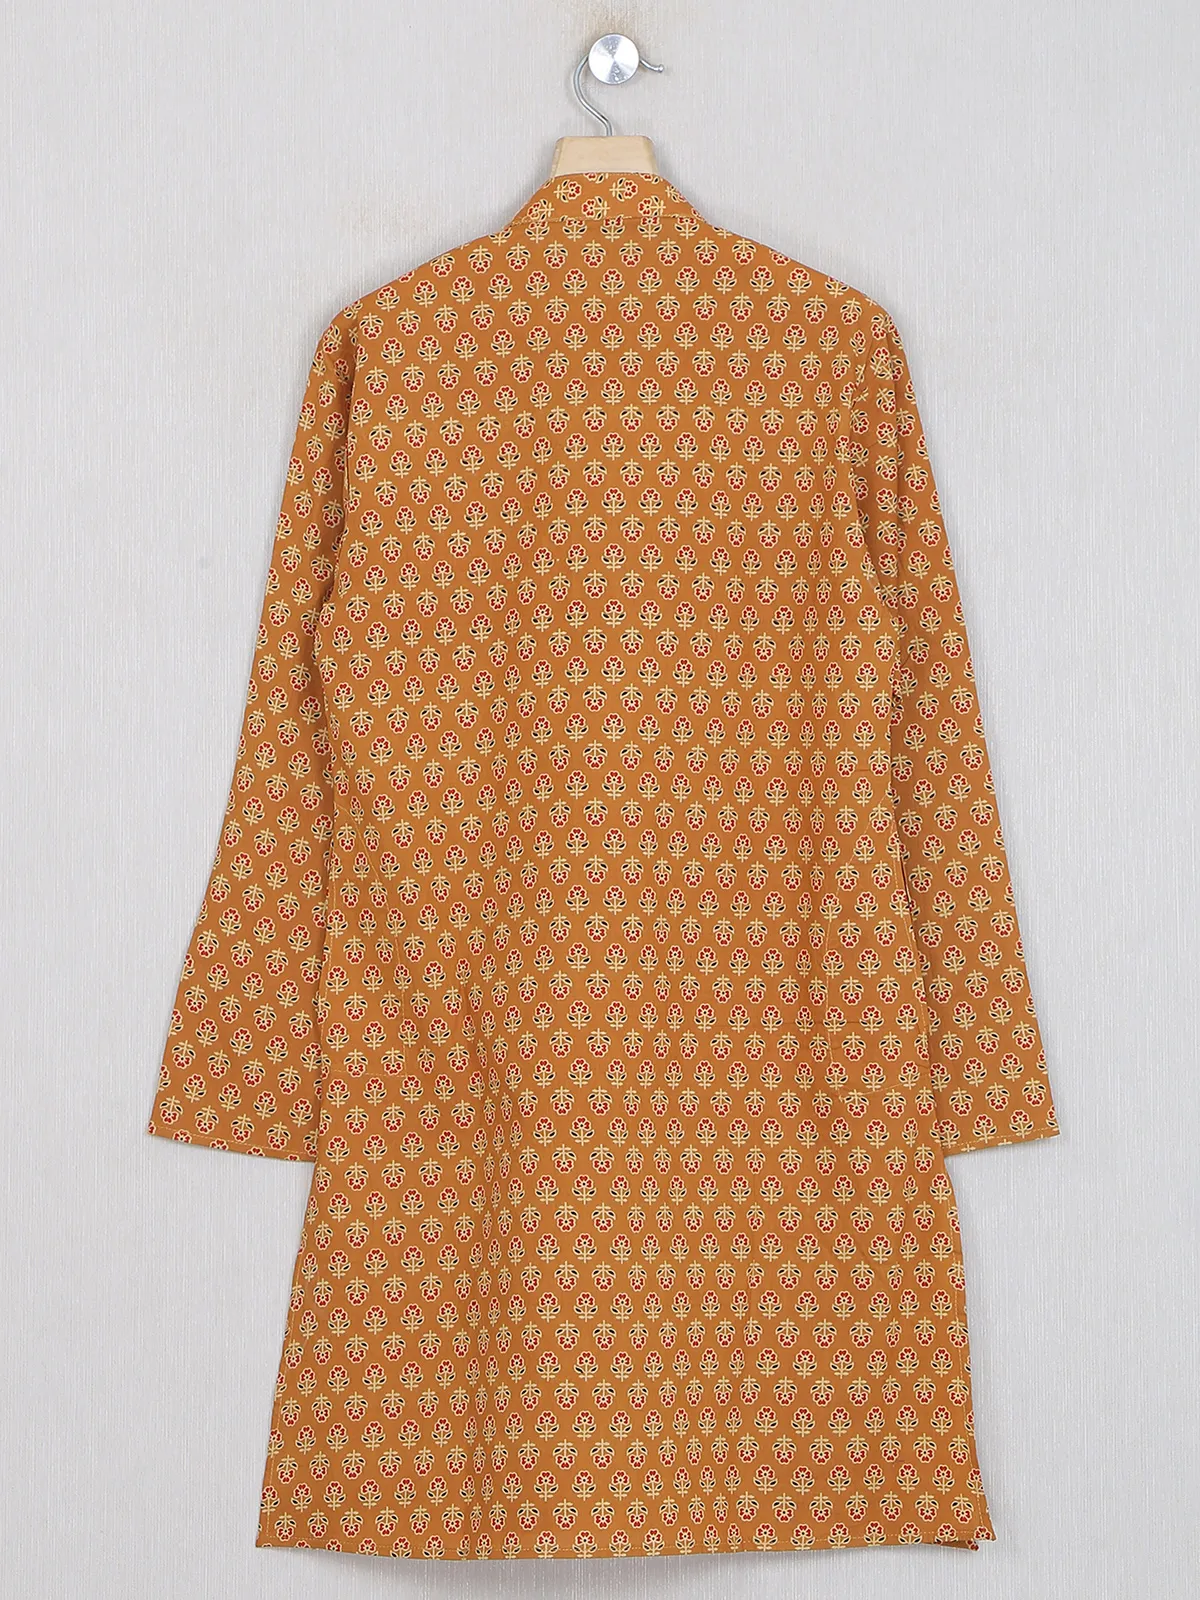 Printed bronze orange cotton kurta suit